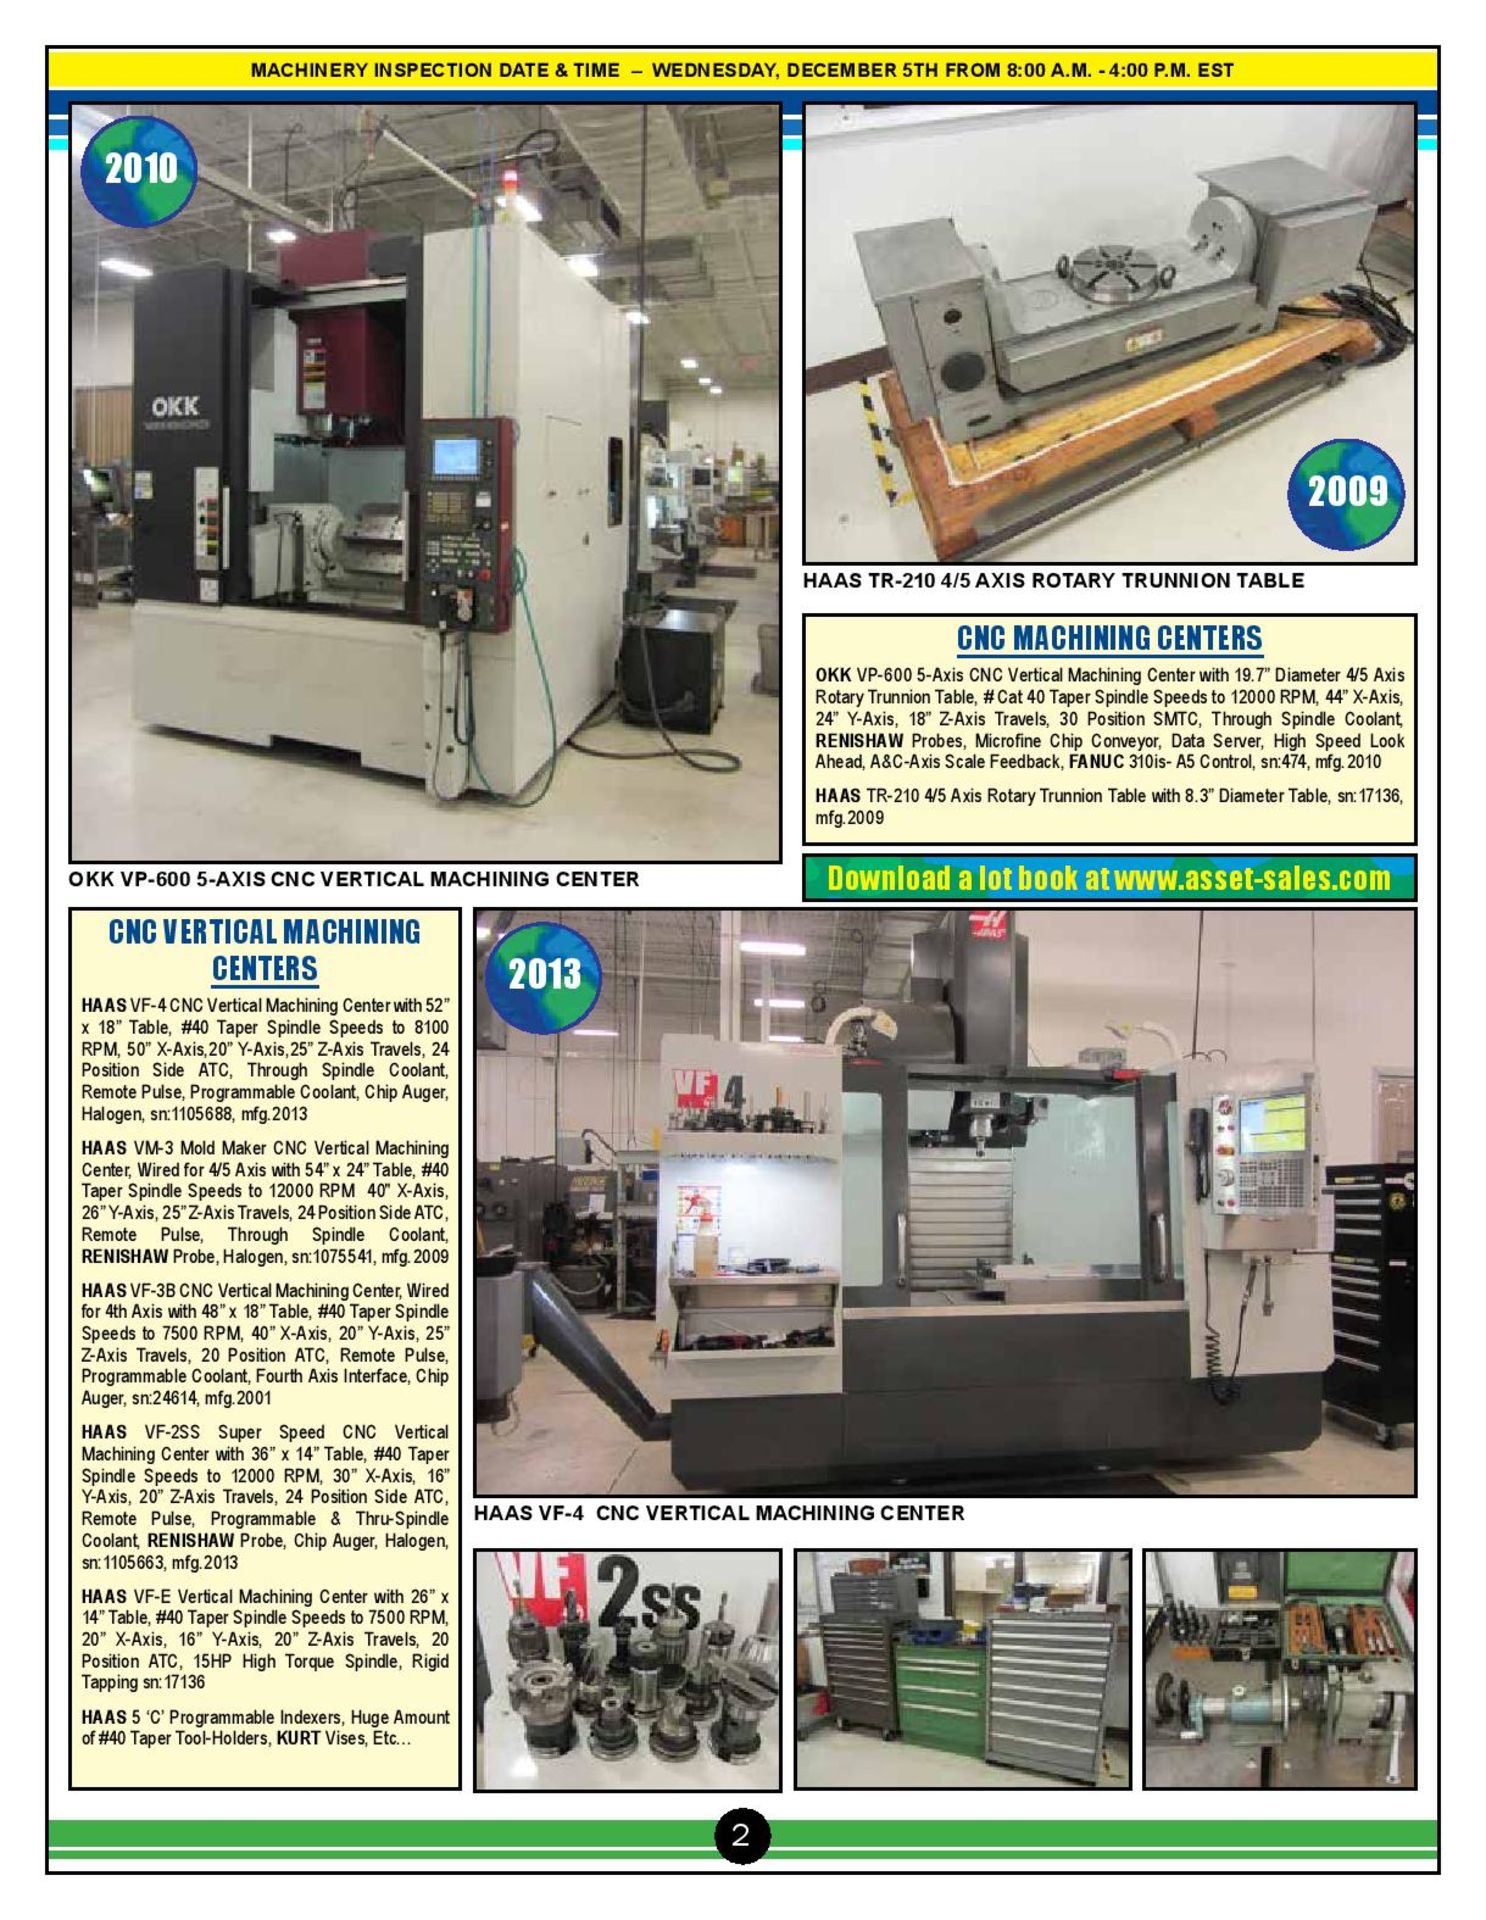 Register Now! TRI-TECH USA INC. - OKK, HAAS, Precision CNC & Fabricating Facility - Image 2 of 8